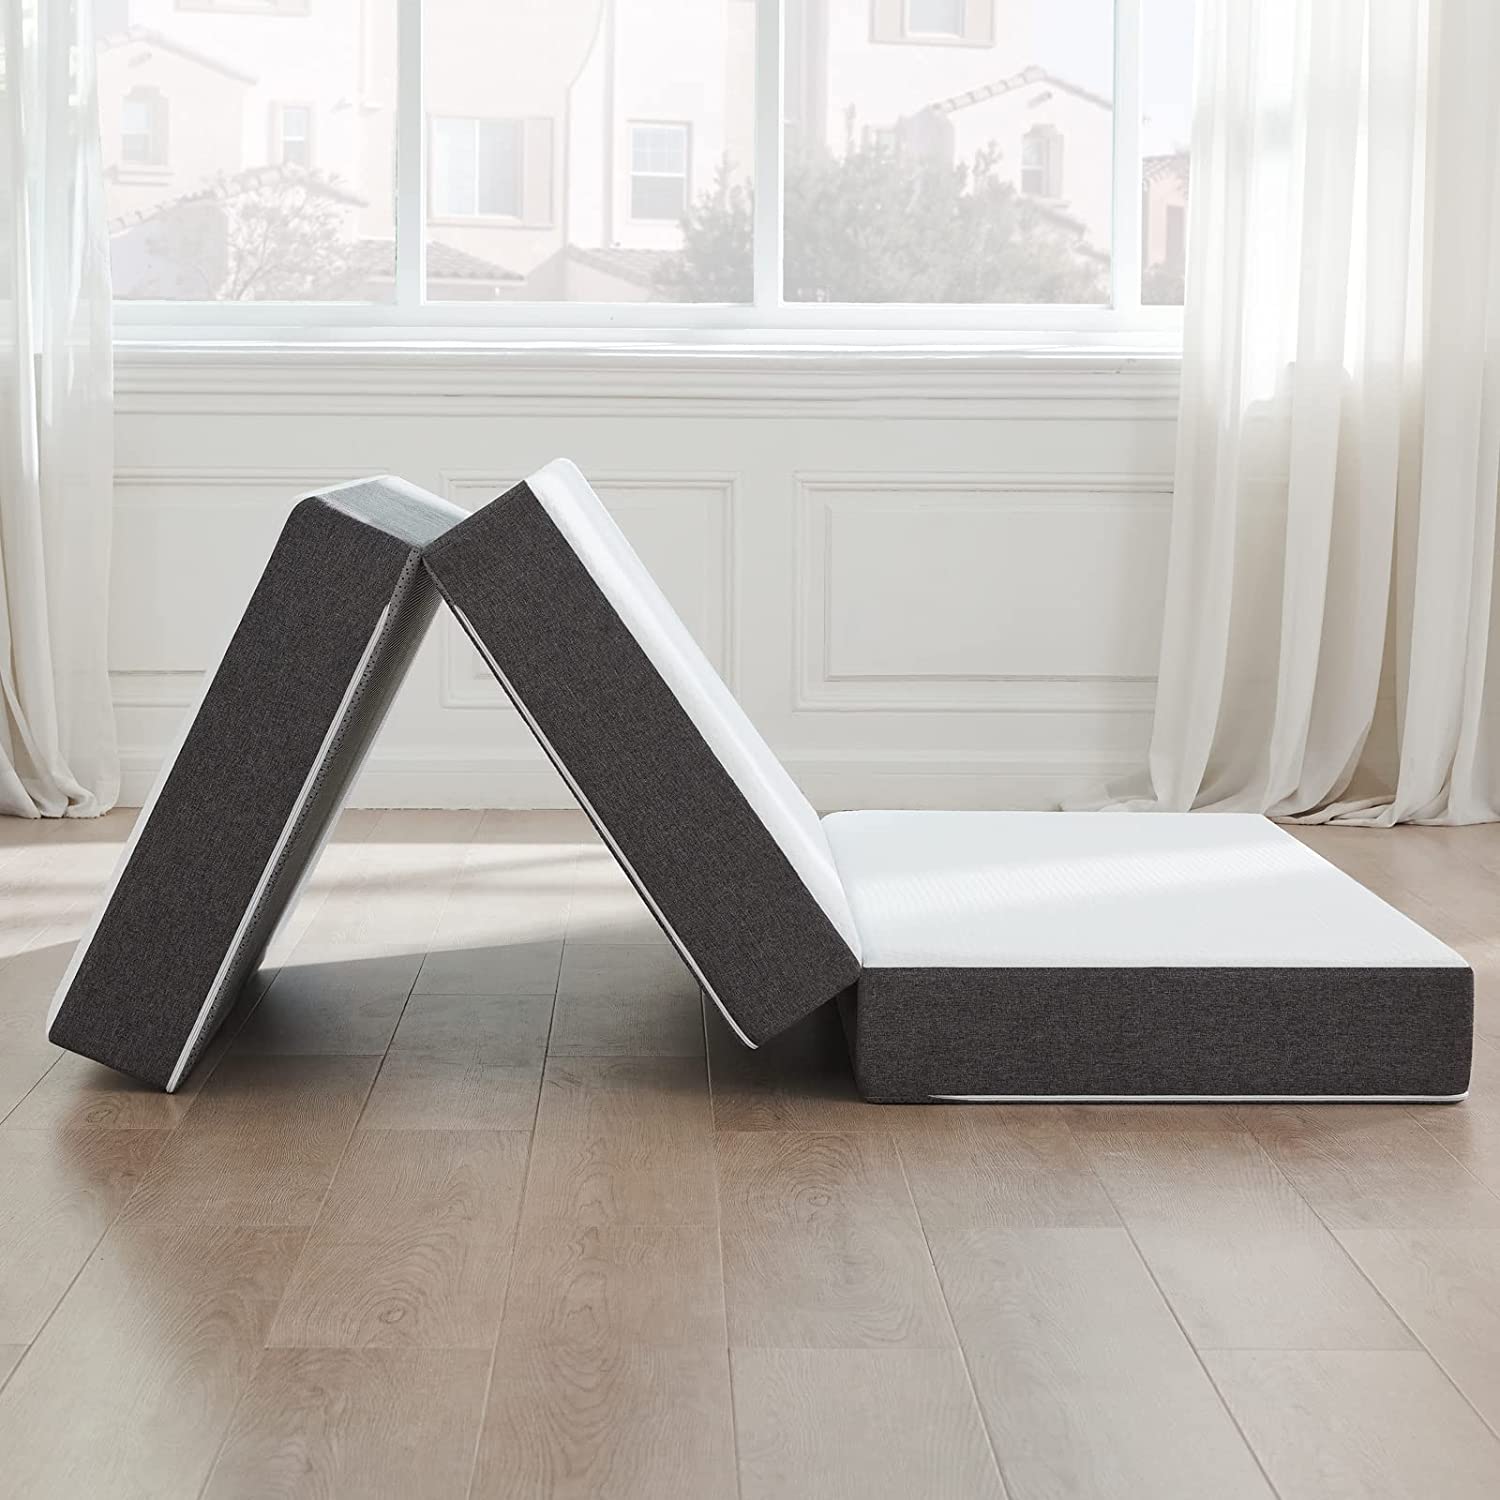 6 inch tri-fold mattress, best folding mattress